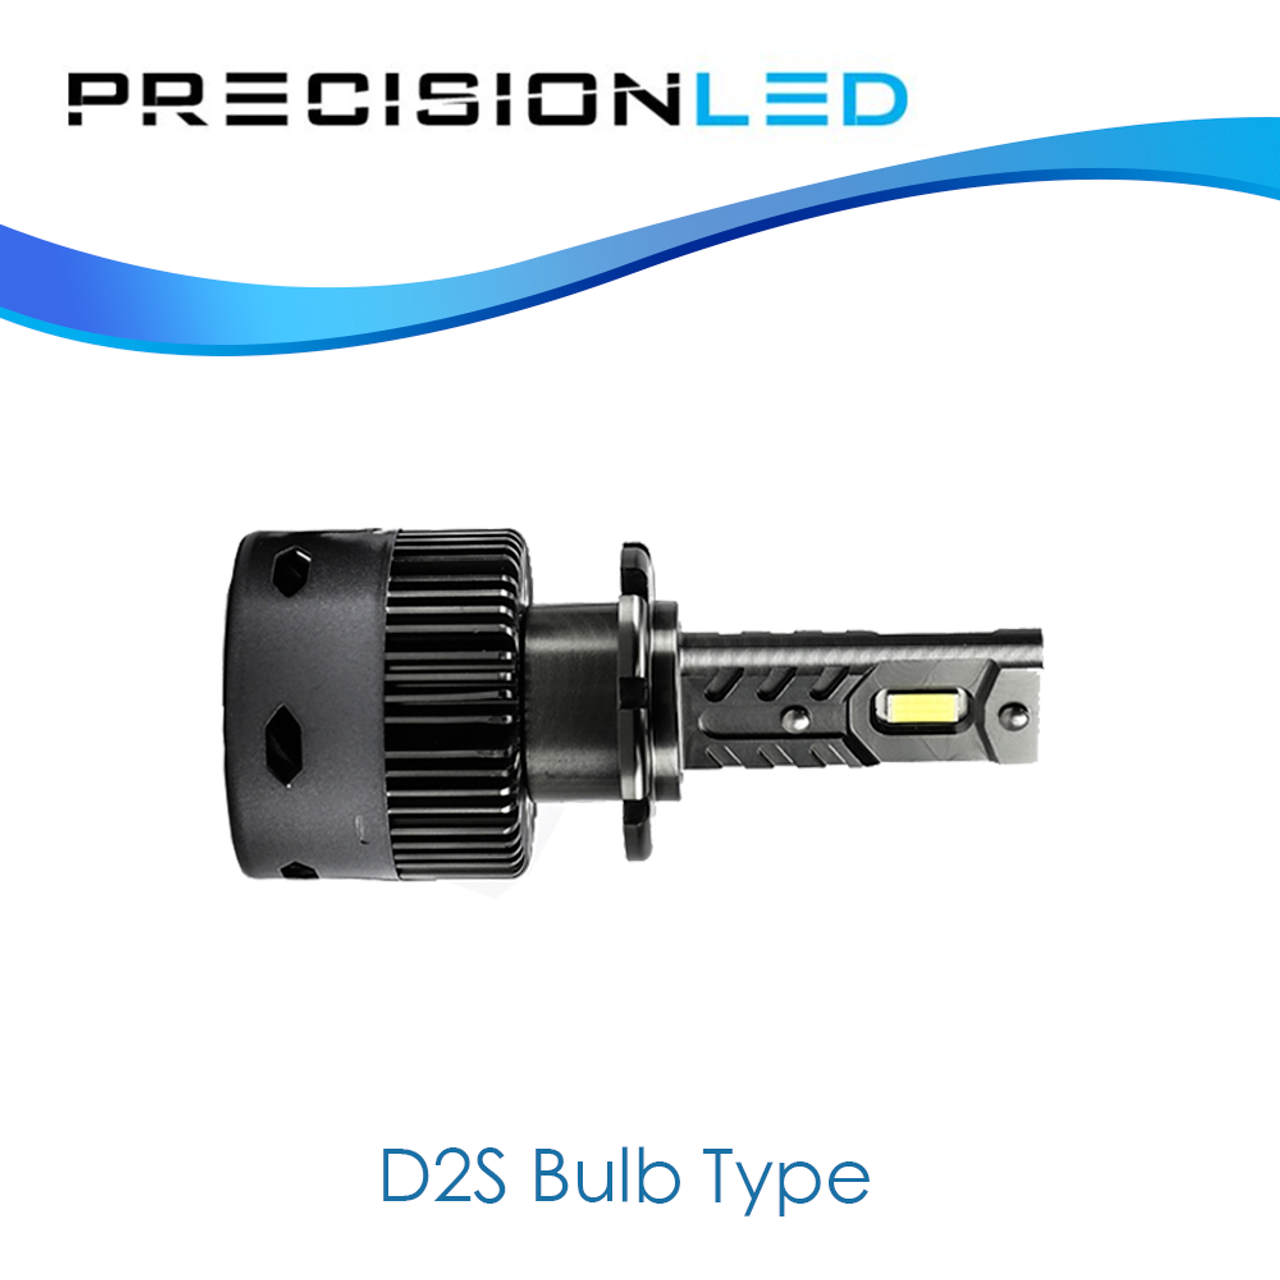 D2H D2S LED Headlight Bulb Lamp For Projector Lens 70W 8000LM Car Light  Retrofit